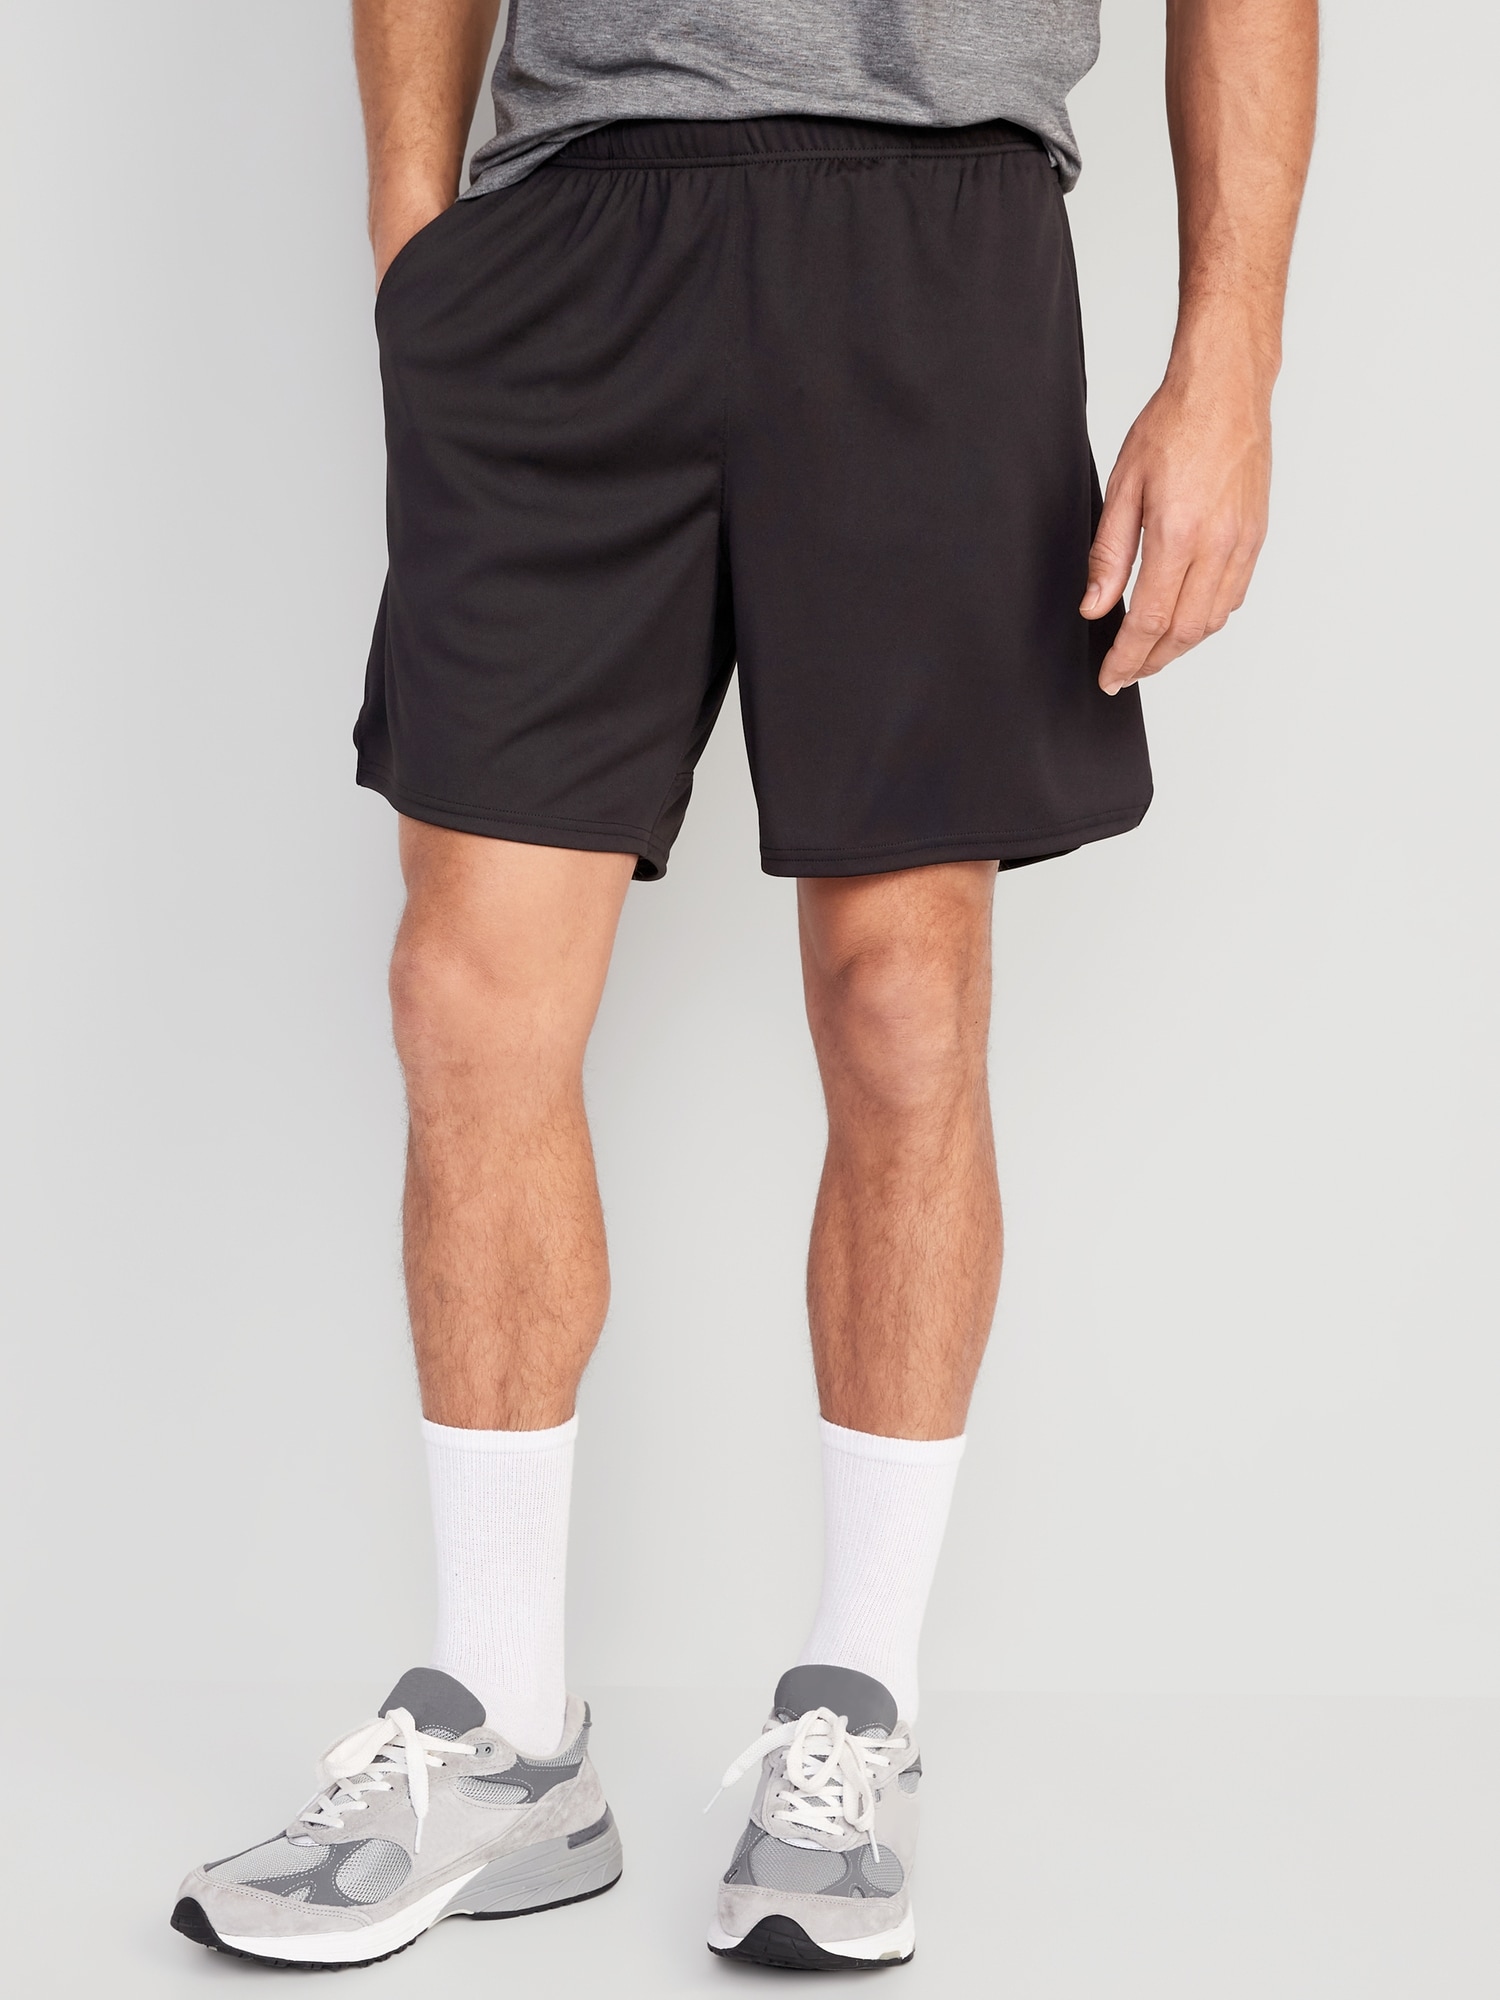 Old Navy Go-Dry Mesh Basketball Shorts for Men -- 7-inch inseam black. 1